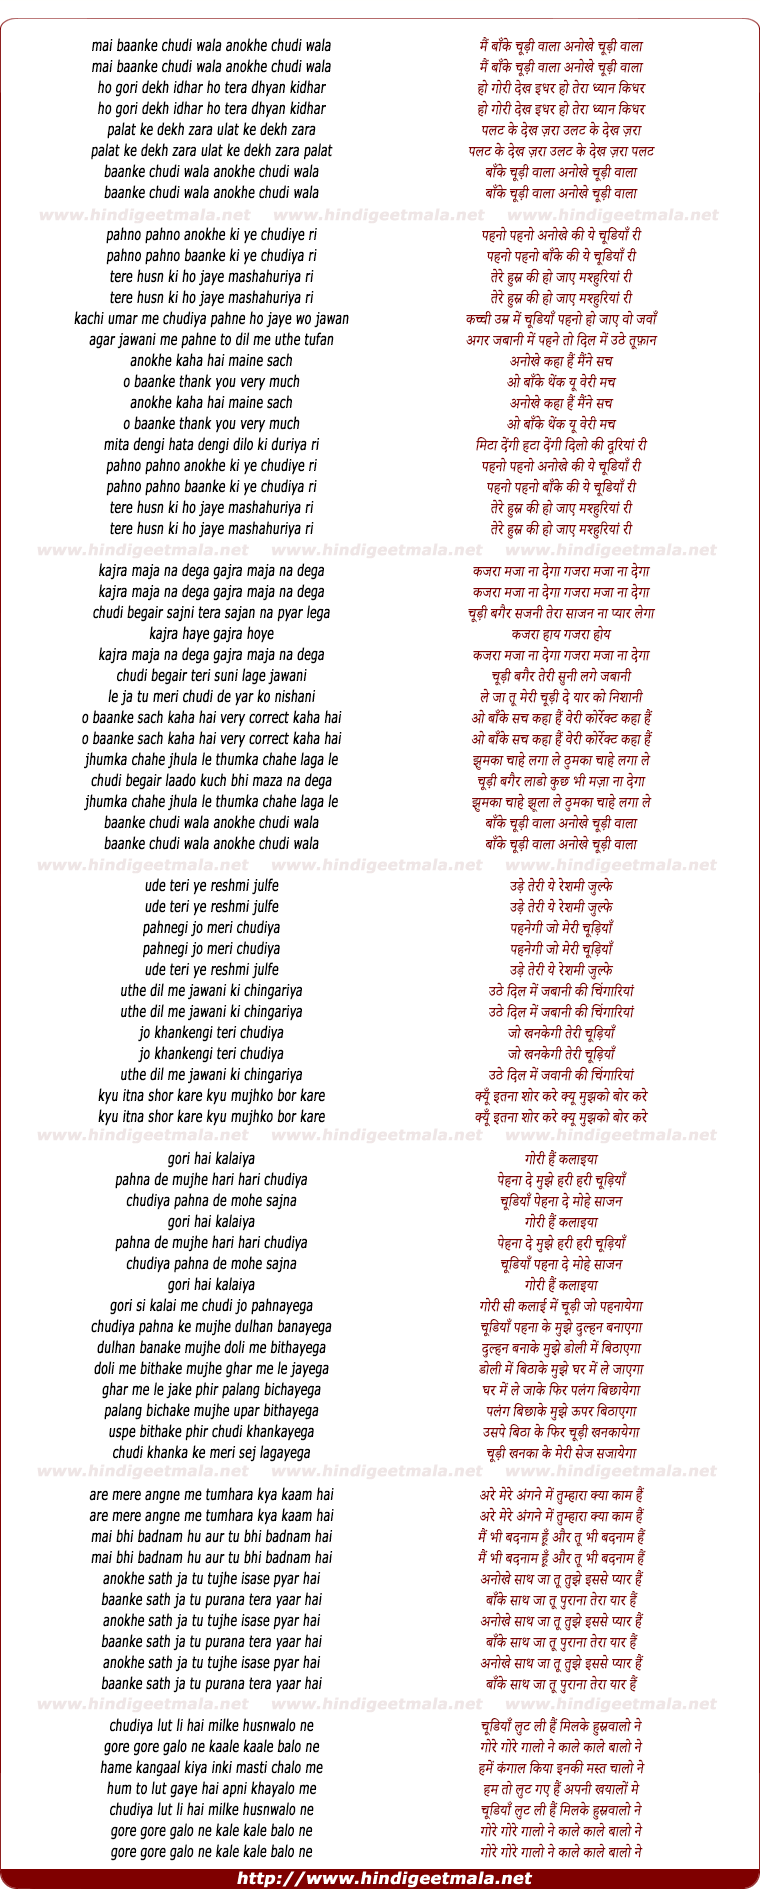 lyrics of song Banke Chudi Wala Anokhe Chudi Wala